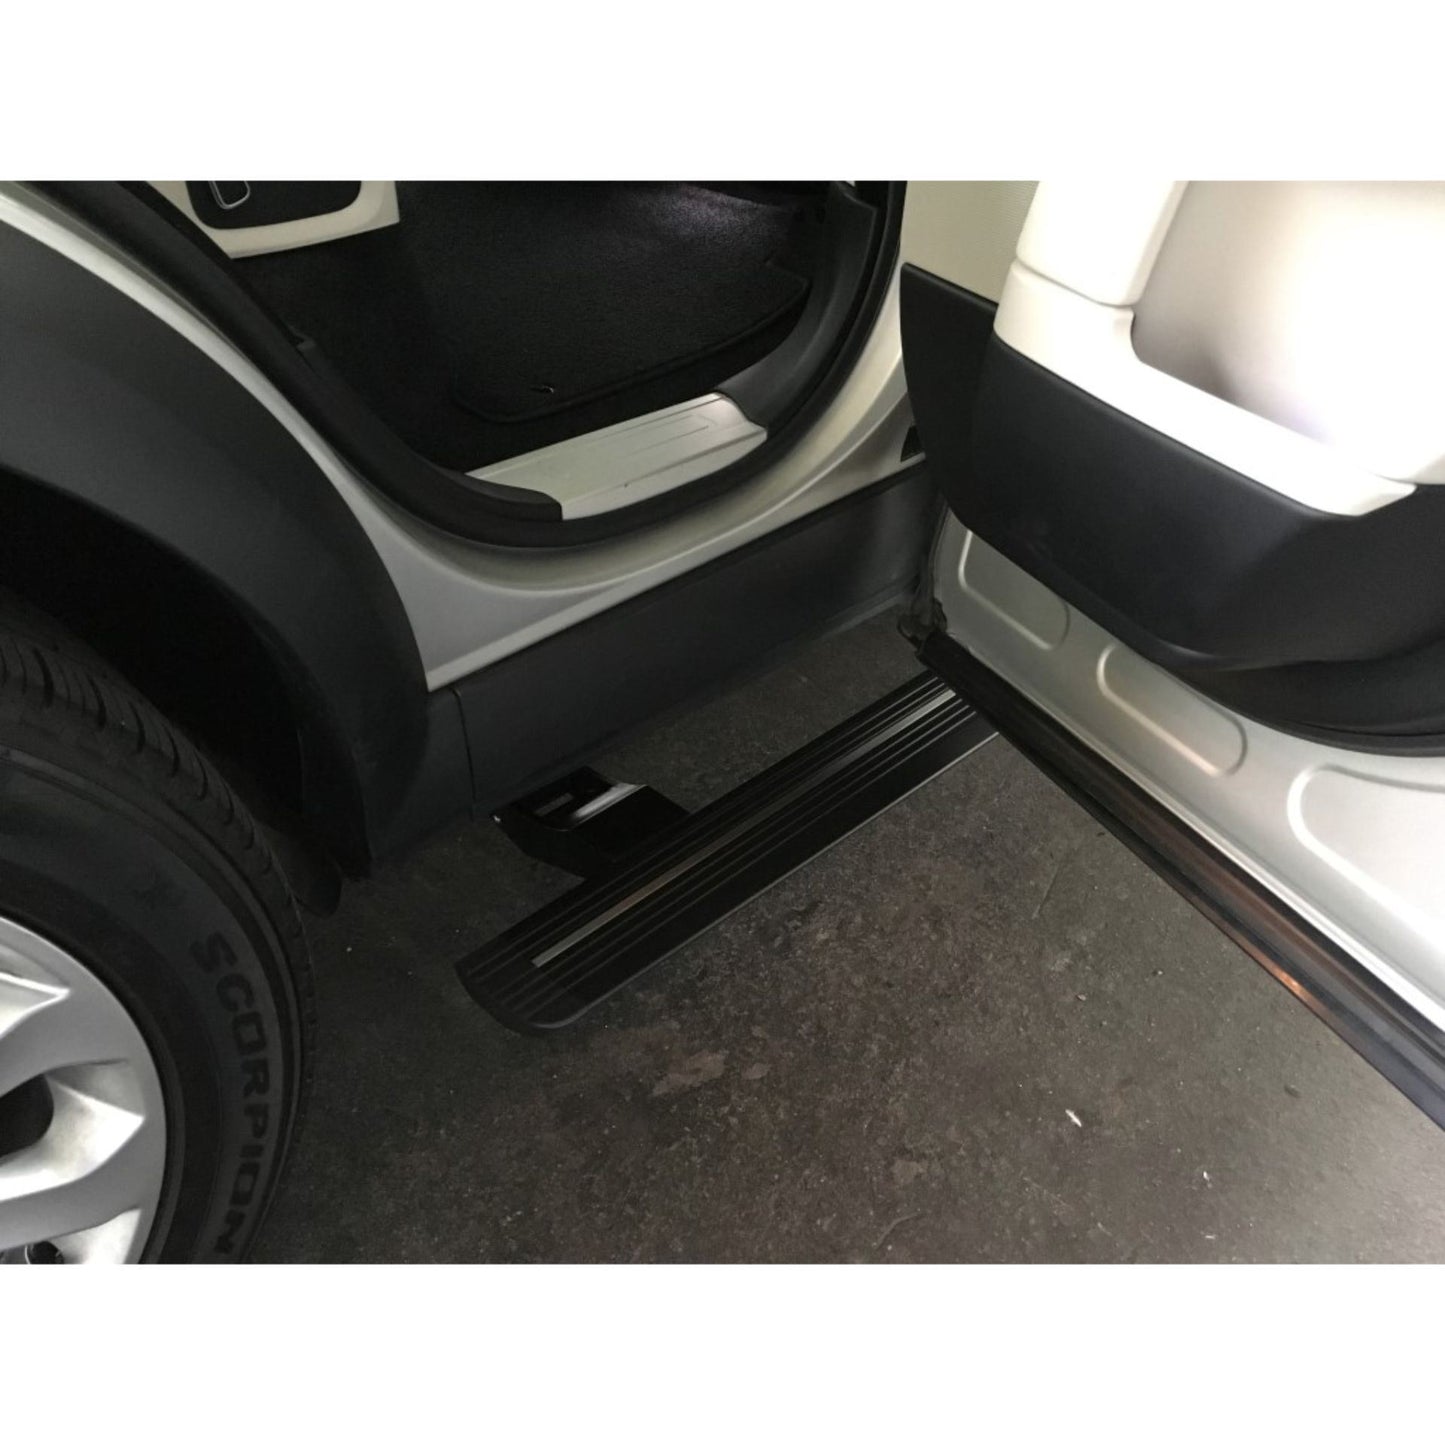 Electric Deployable Side Steps for Range Rover Velar 2017 Only